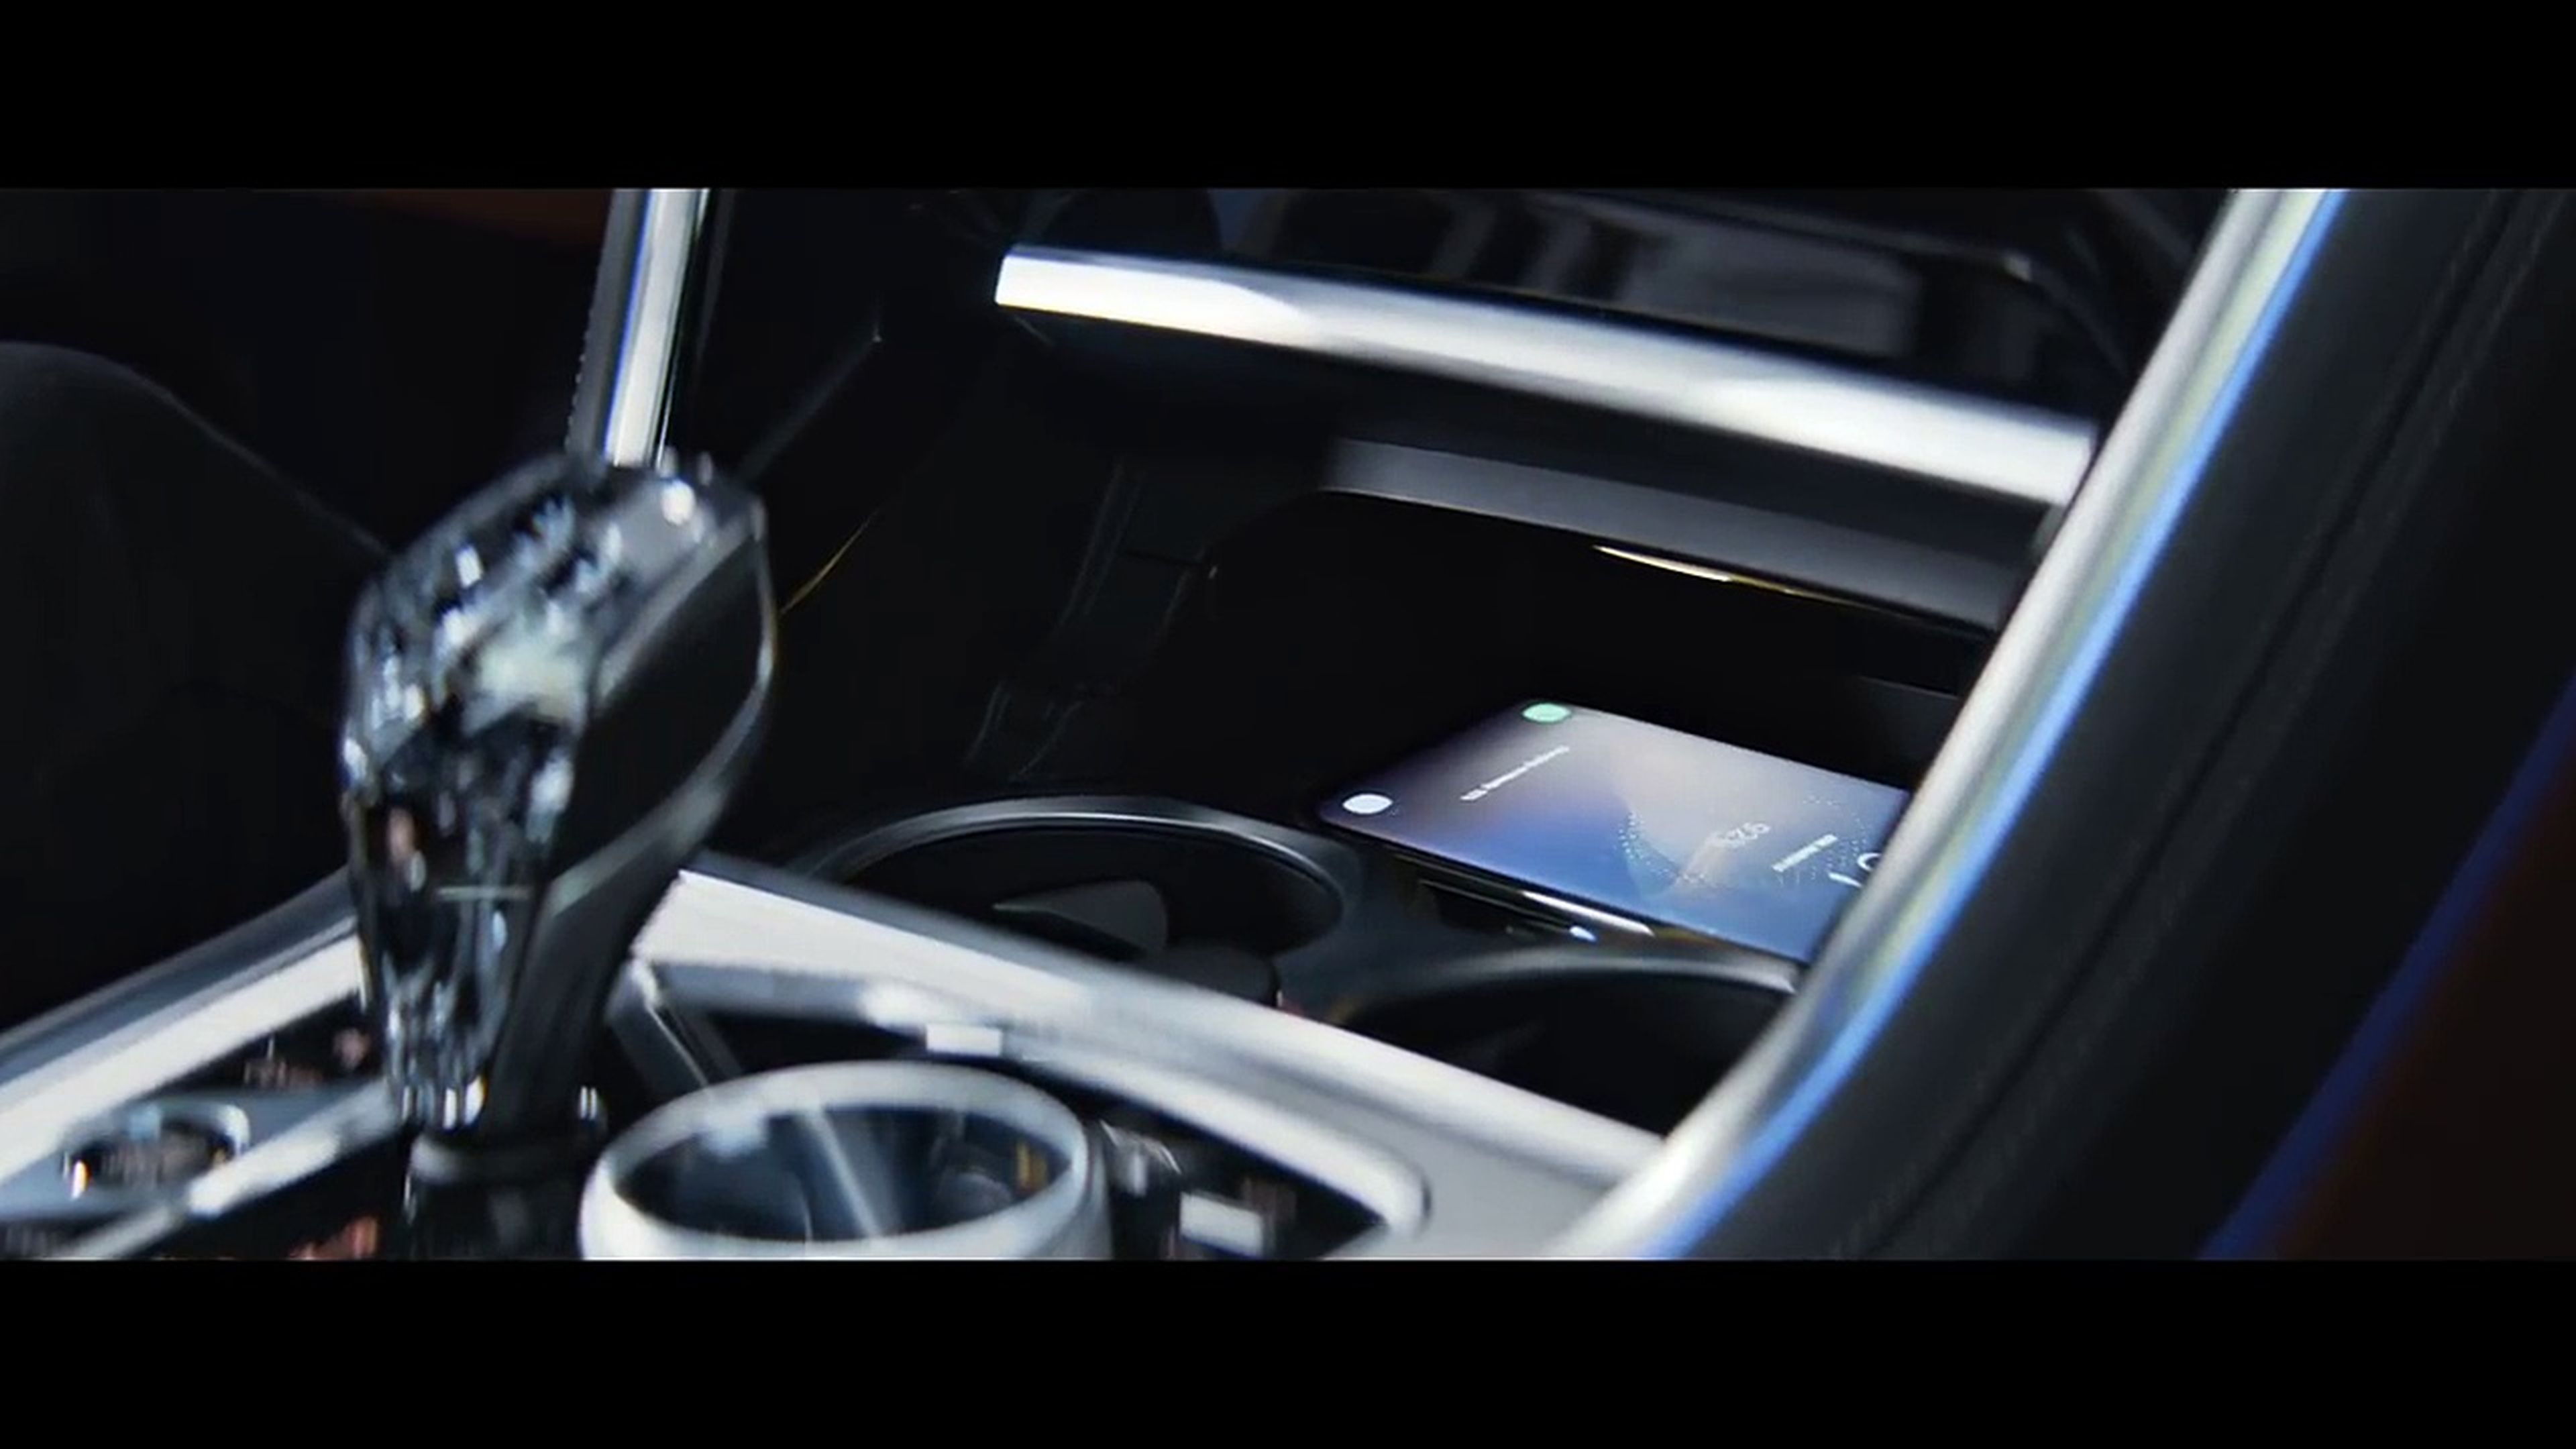 VÍDEO: nuevo BMW Serie 8, analízalo con todo detalle [TG]